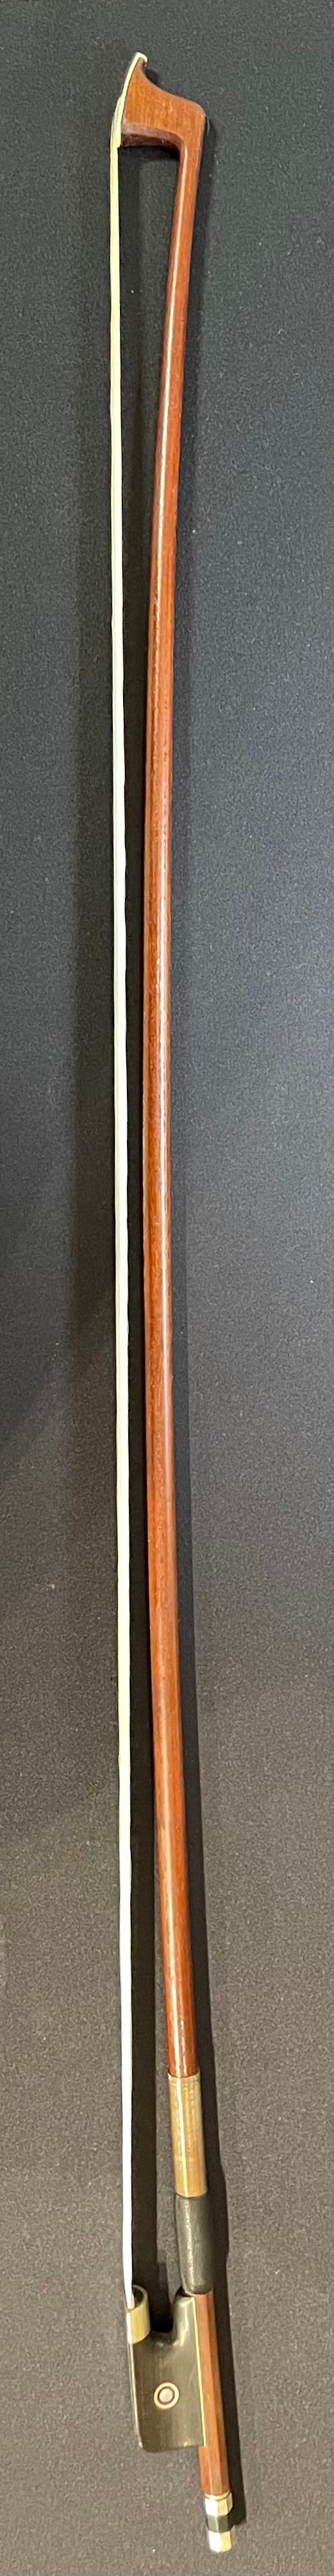 Full Size Viola Bow - Sivori Wood Model